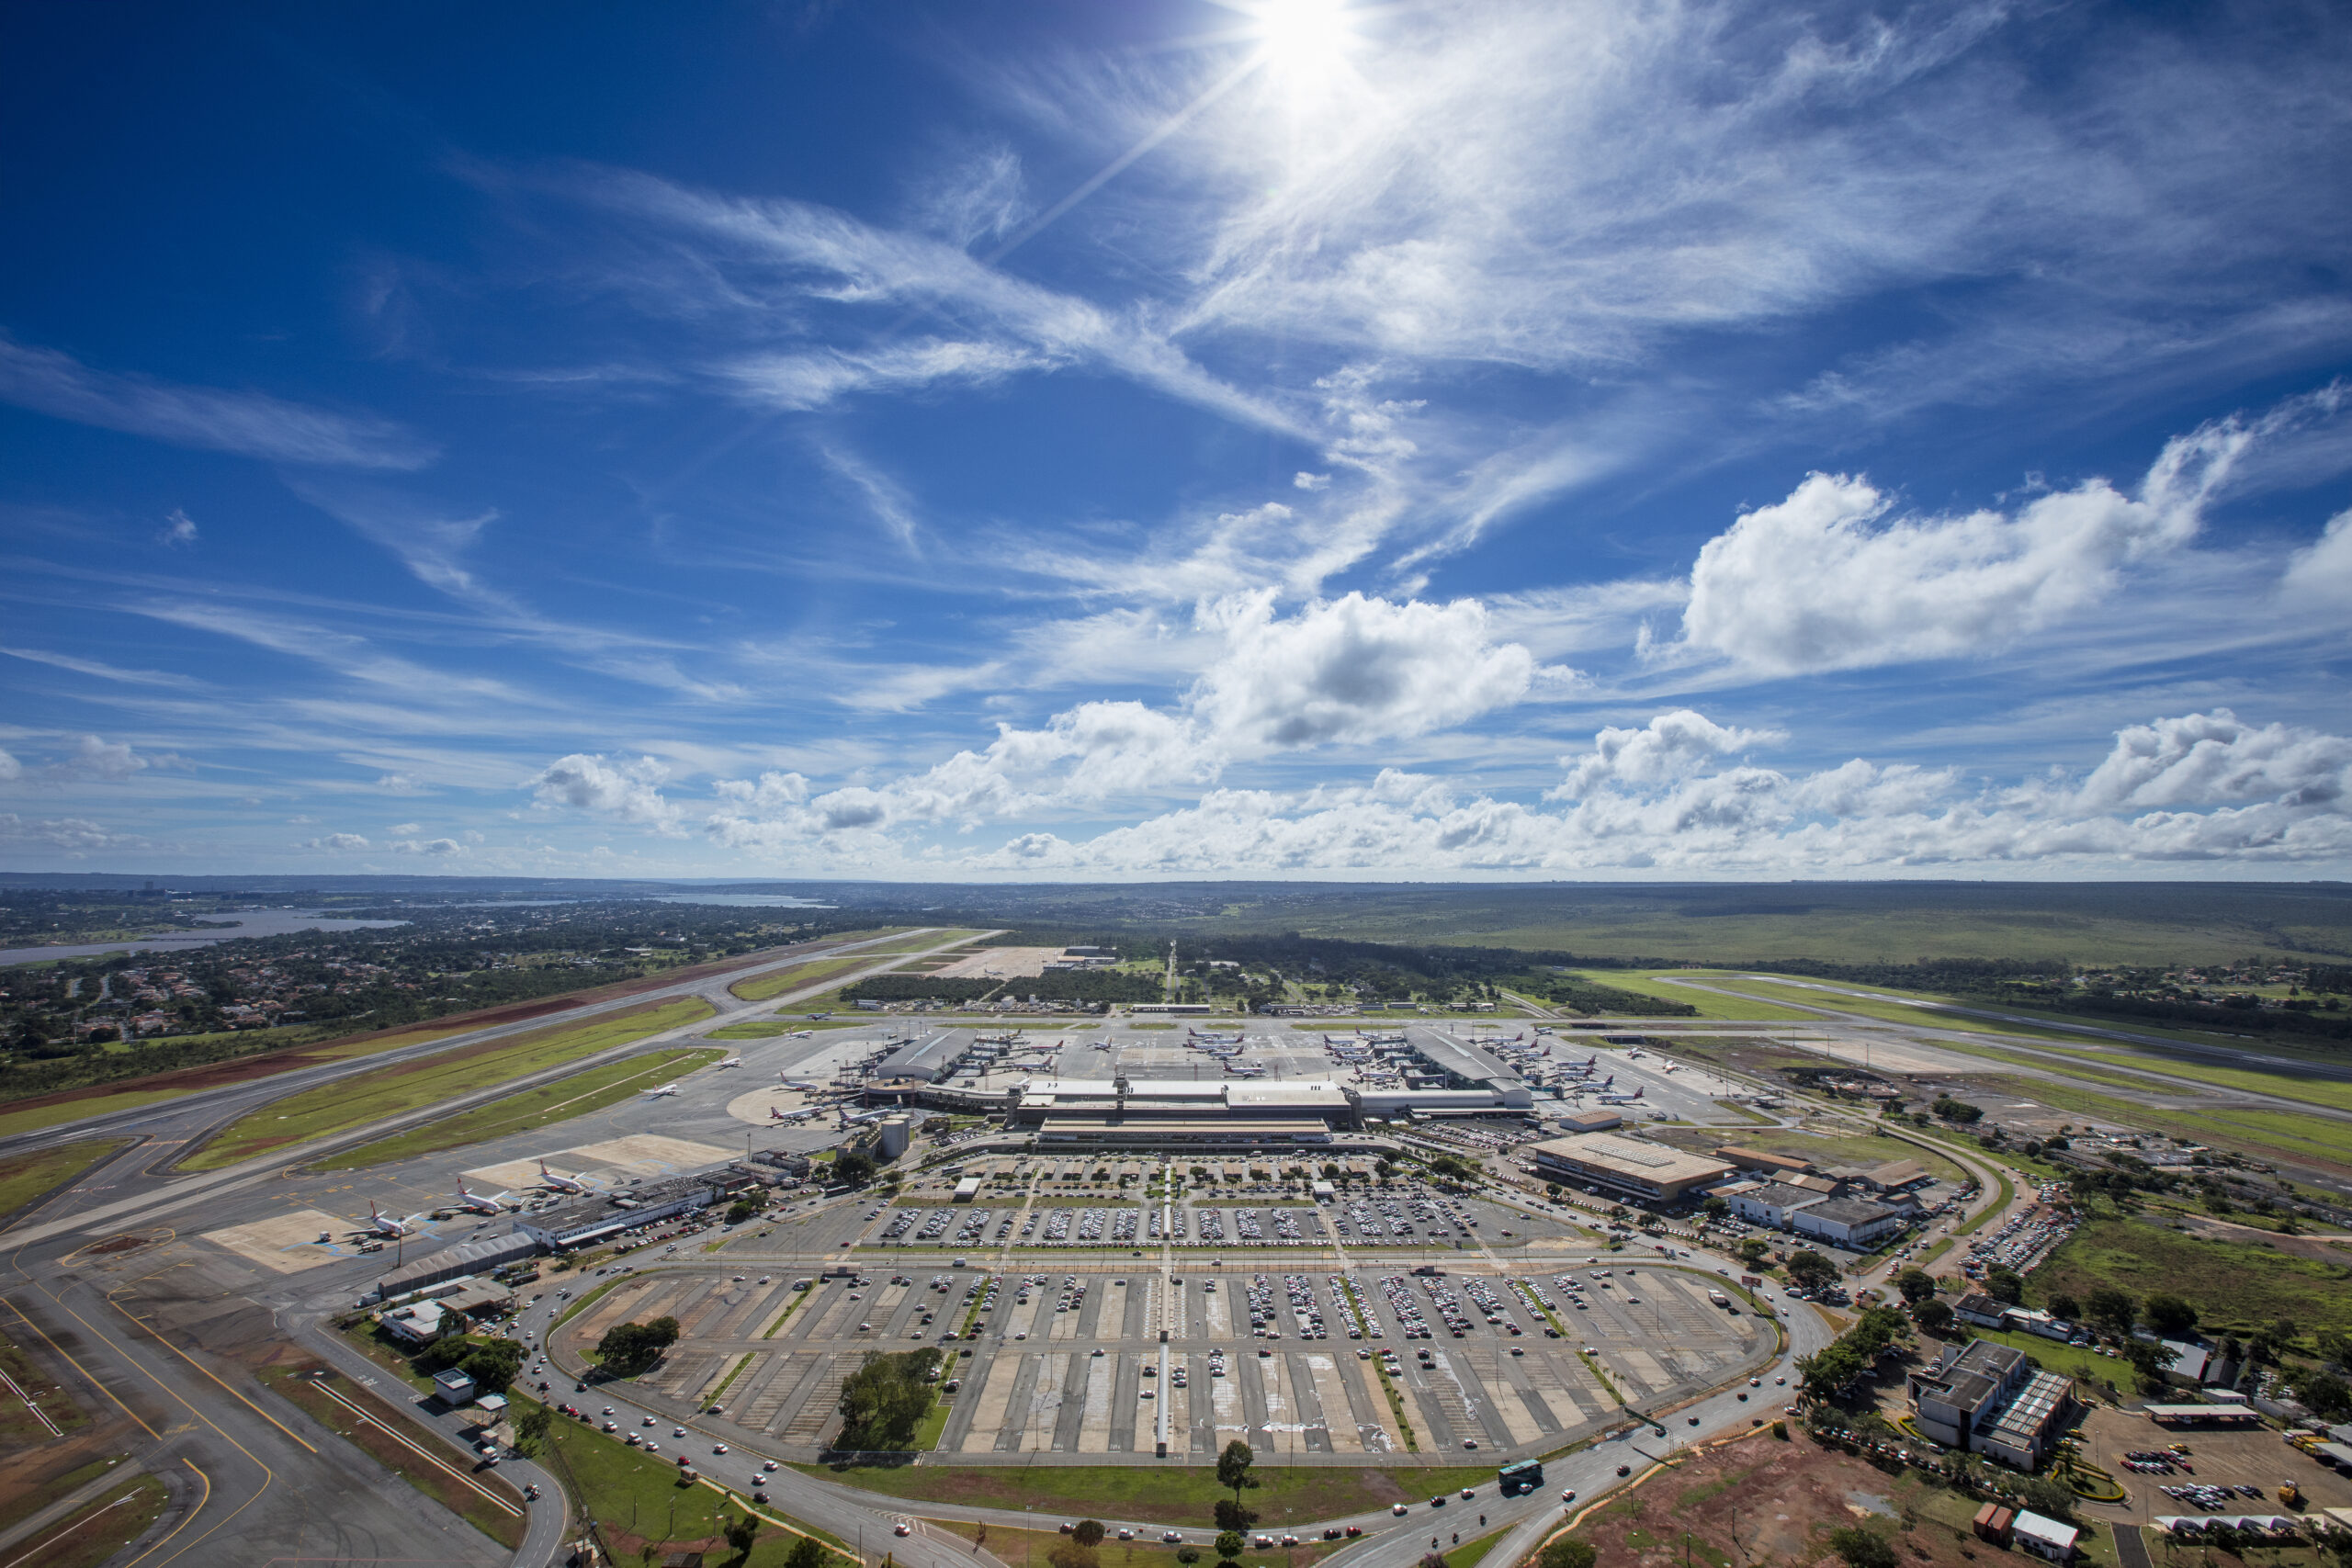 Aeroporto de Brasília. Foto: Bento Viana/Divulgação